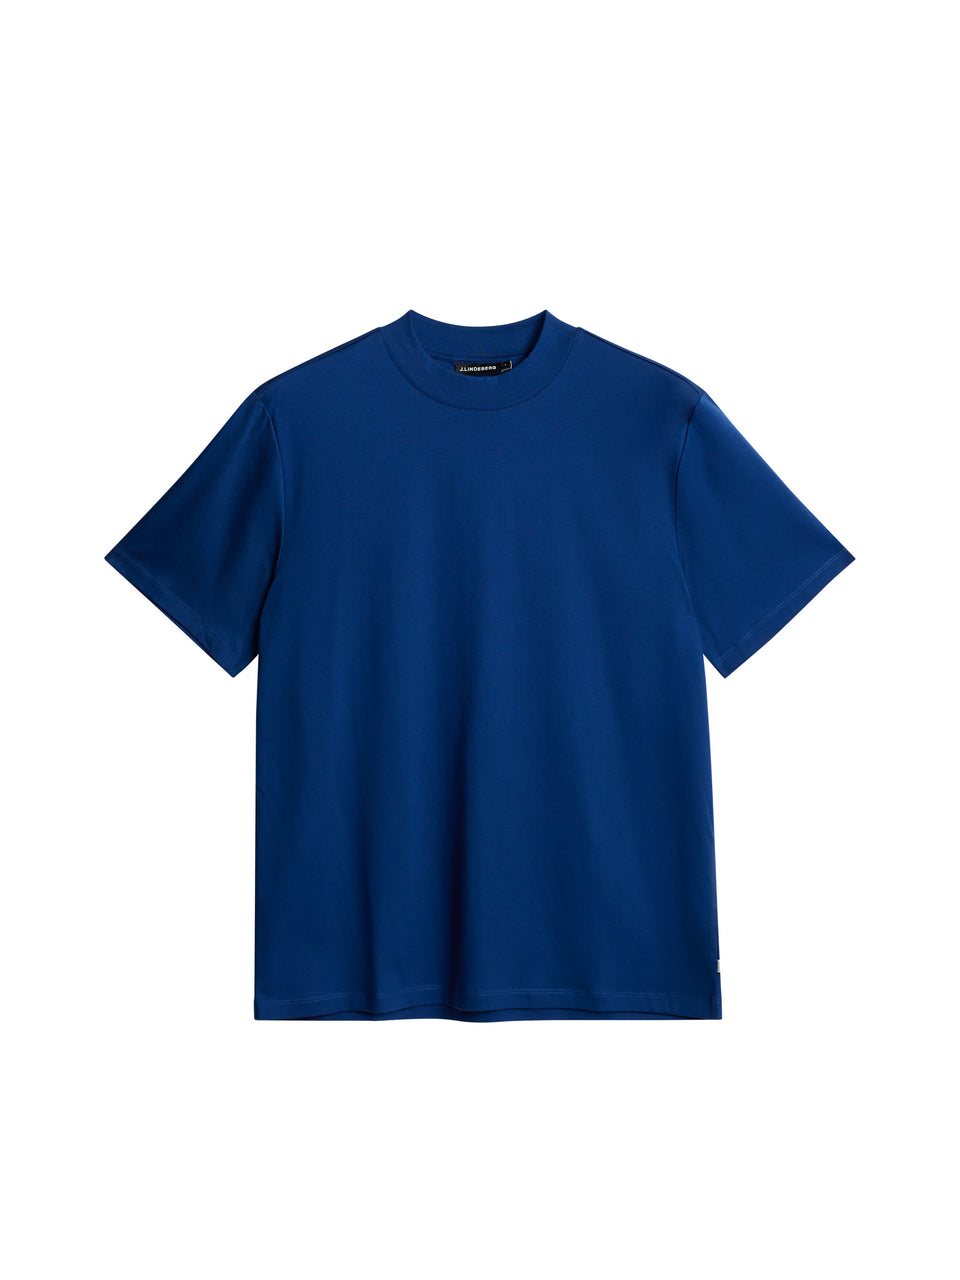 Ace Mock Neck T-shirt / Estate Blue